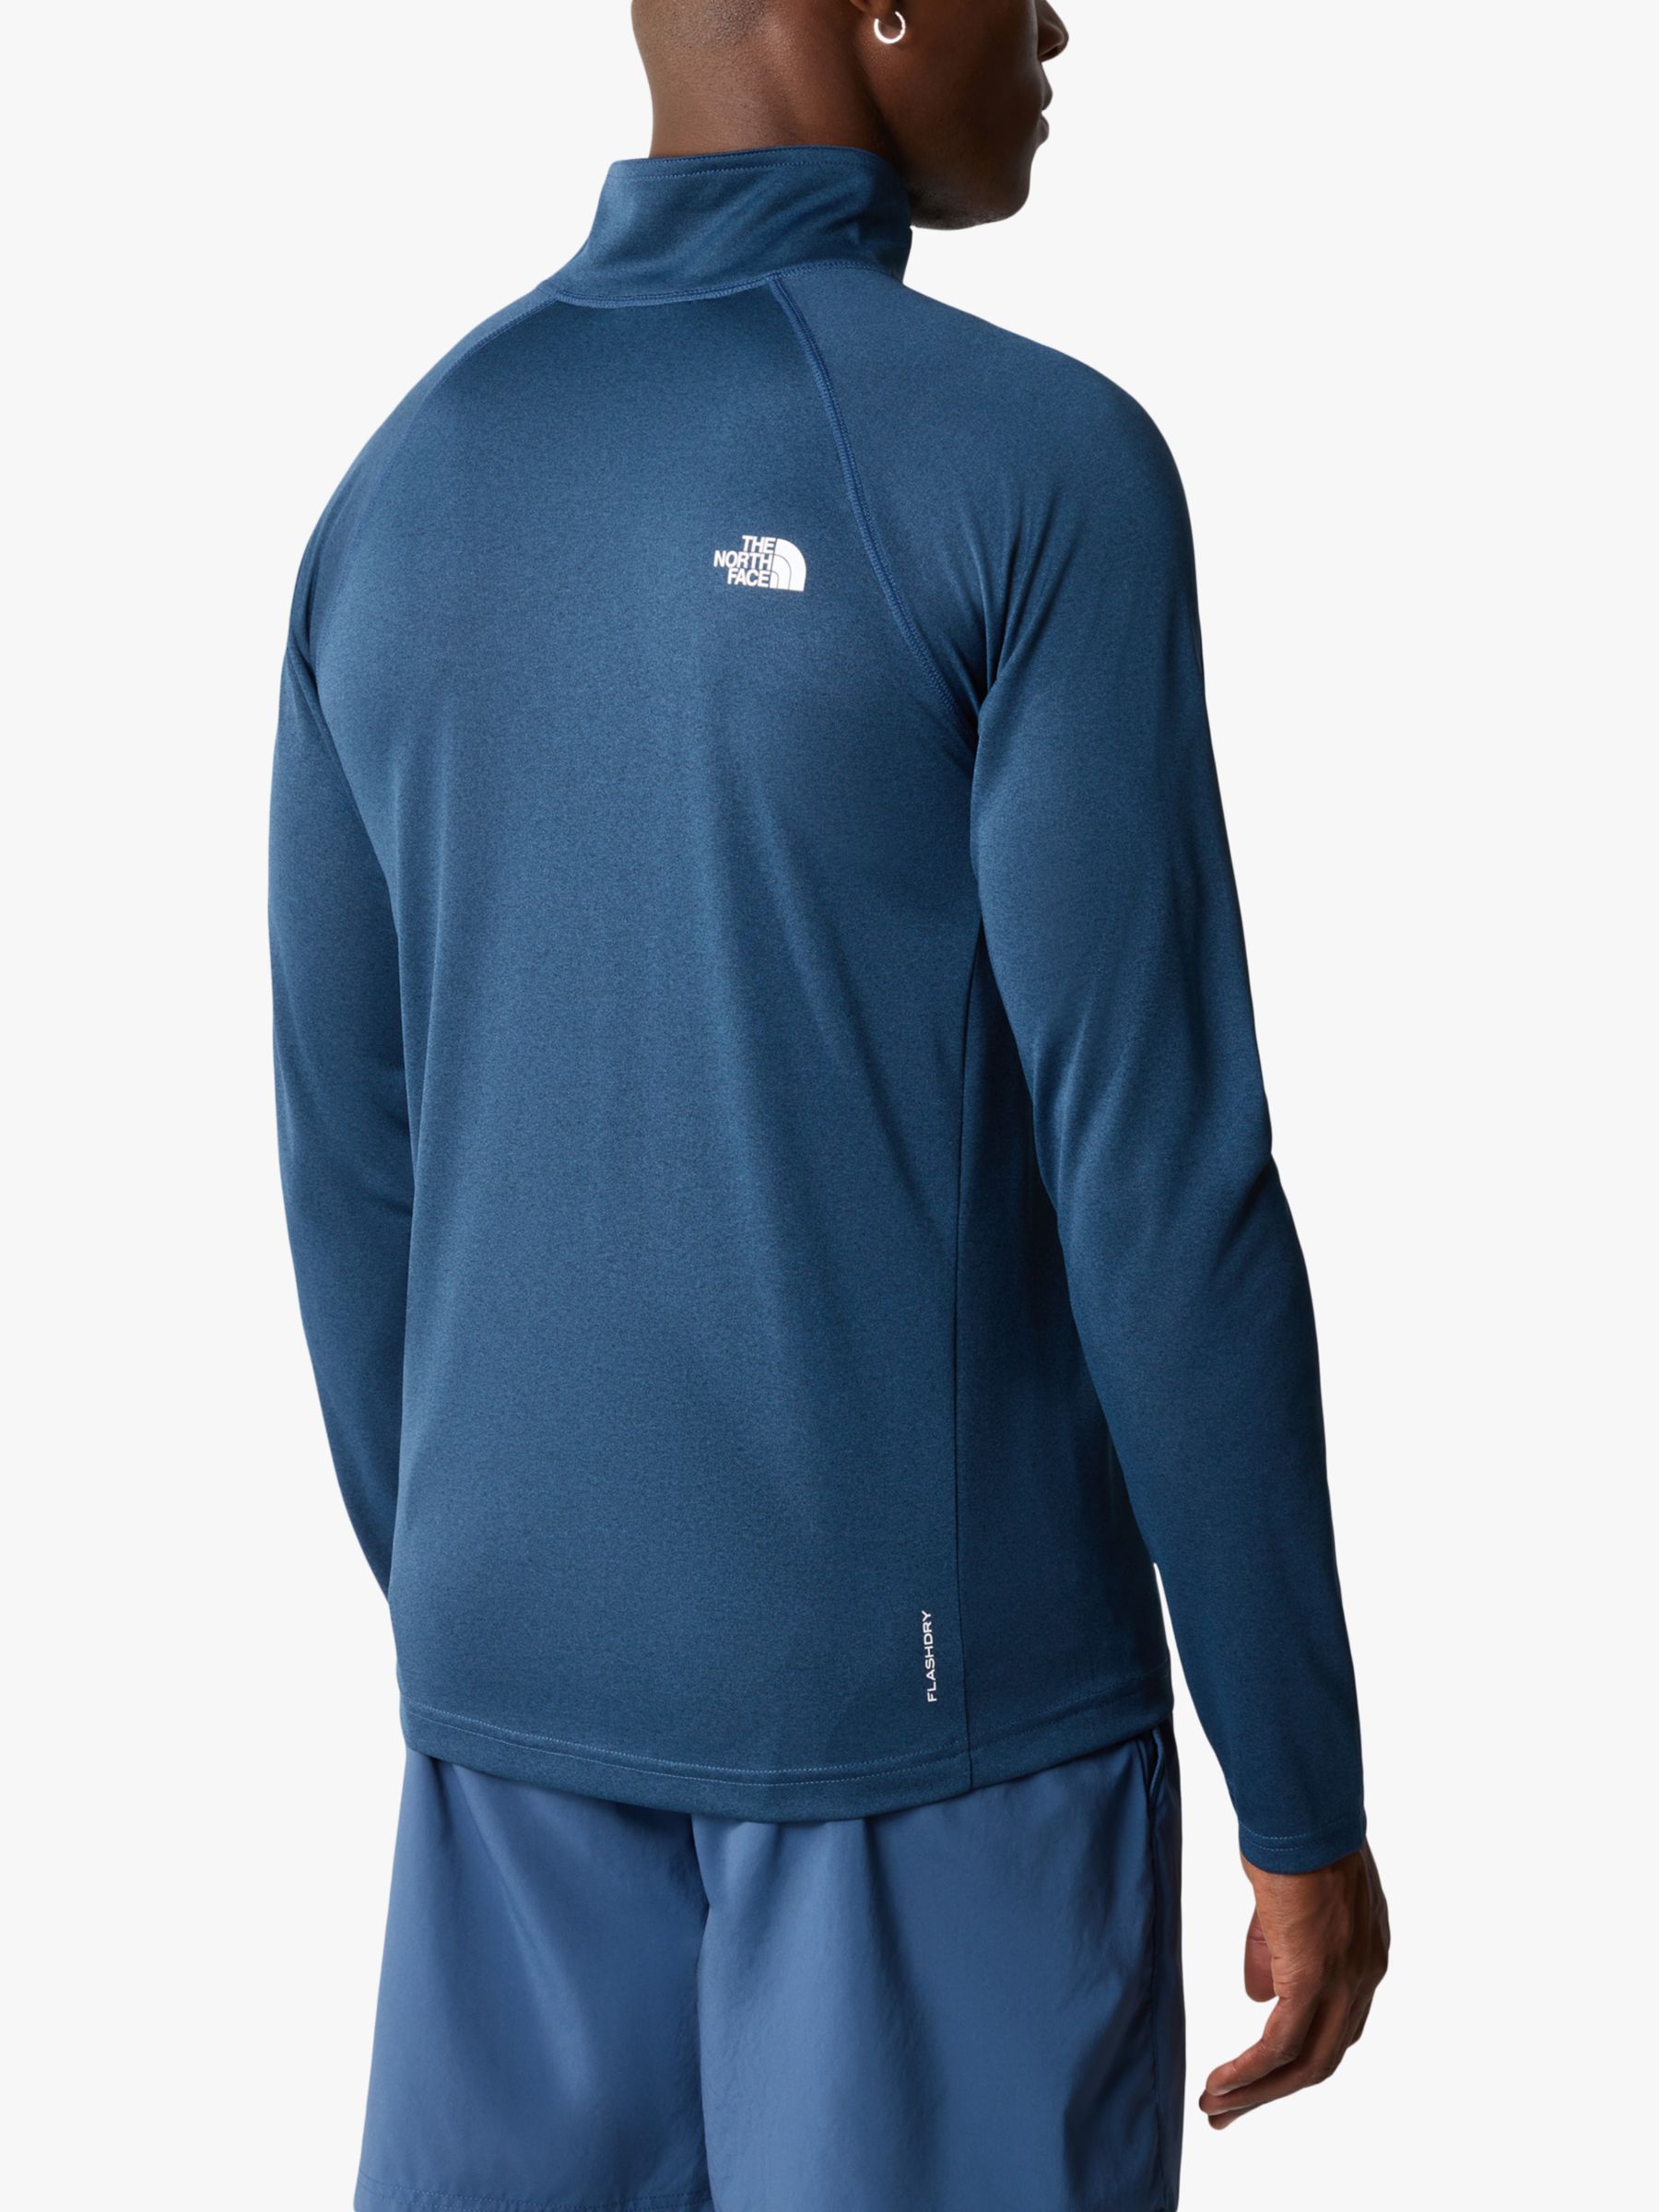 The North Face Flex II 1/4 Zip Long Sleeve T-Shirt, Blue, L